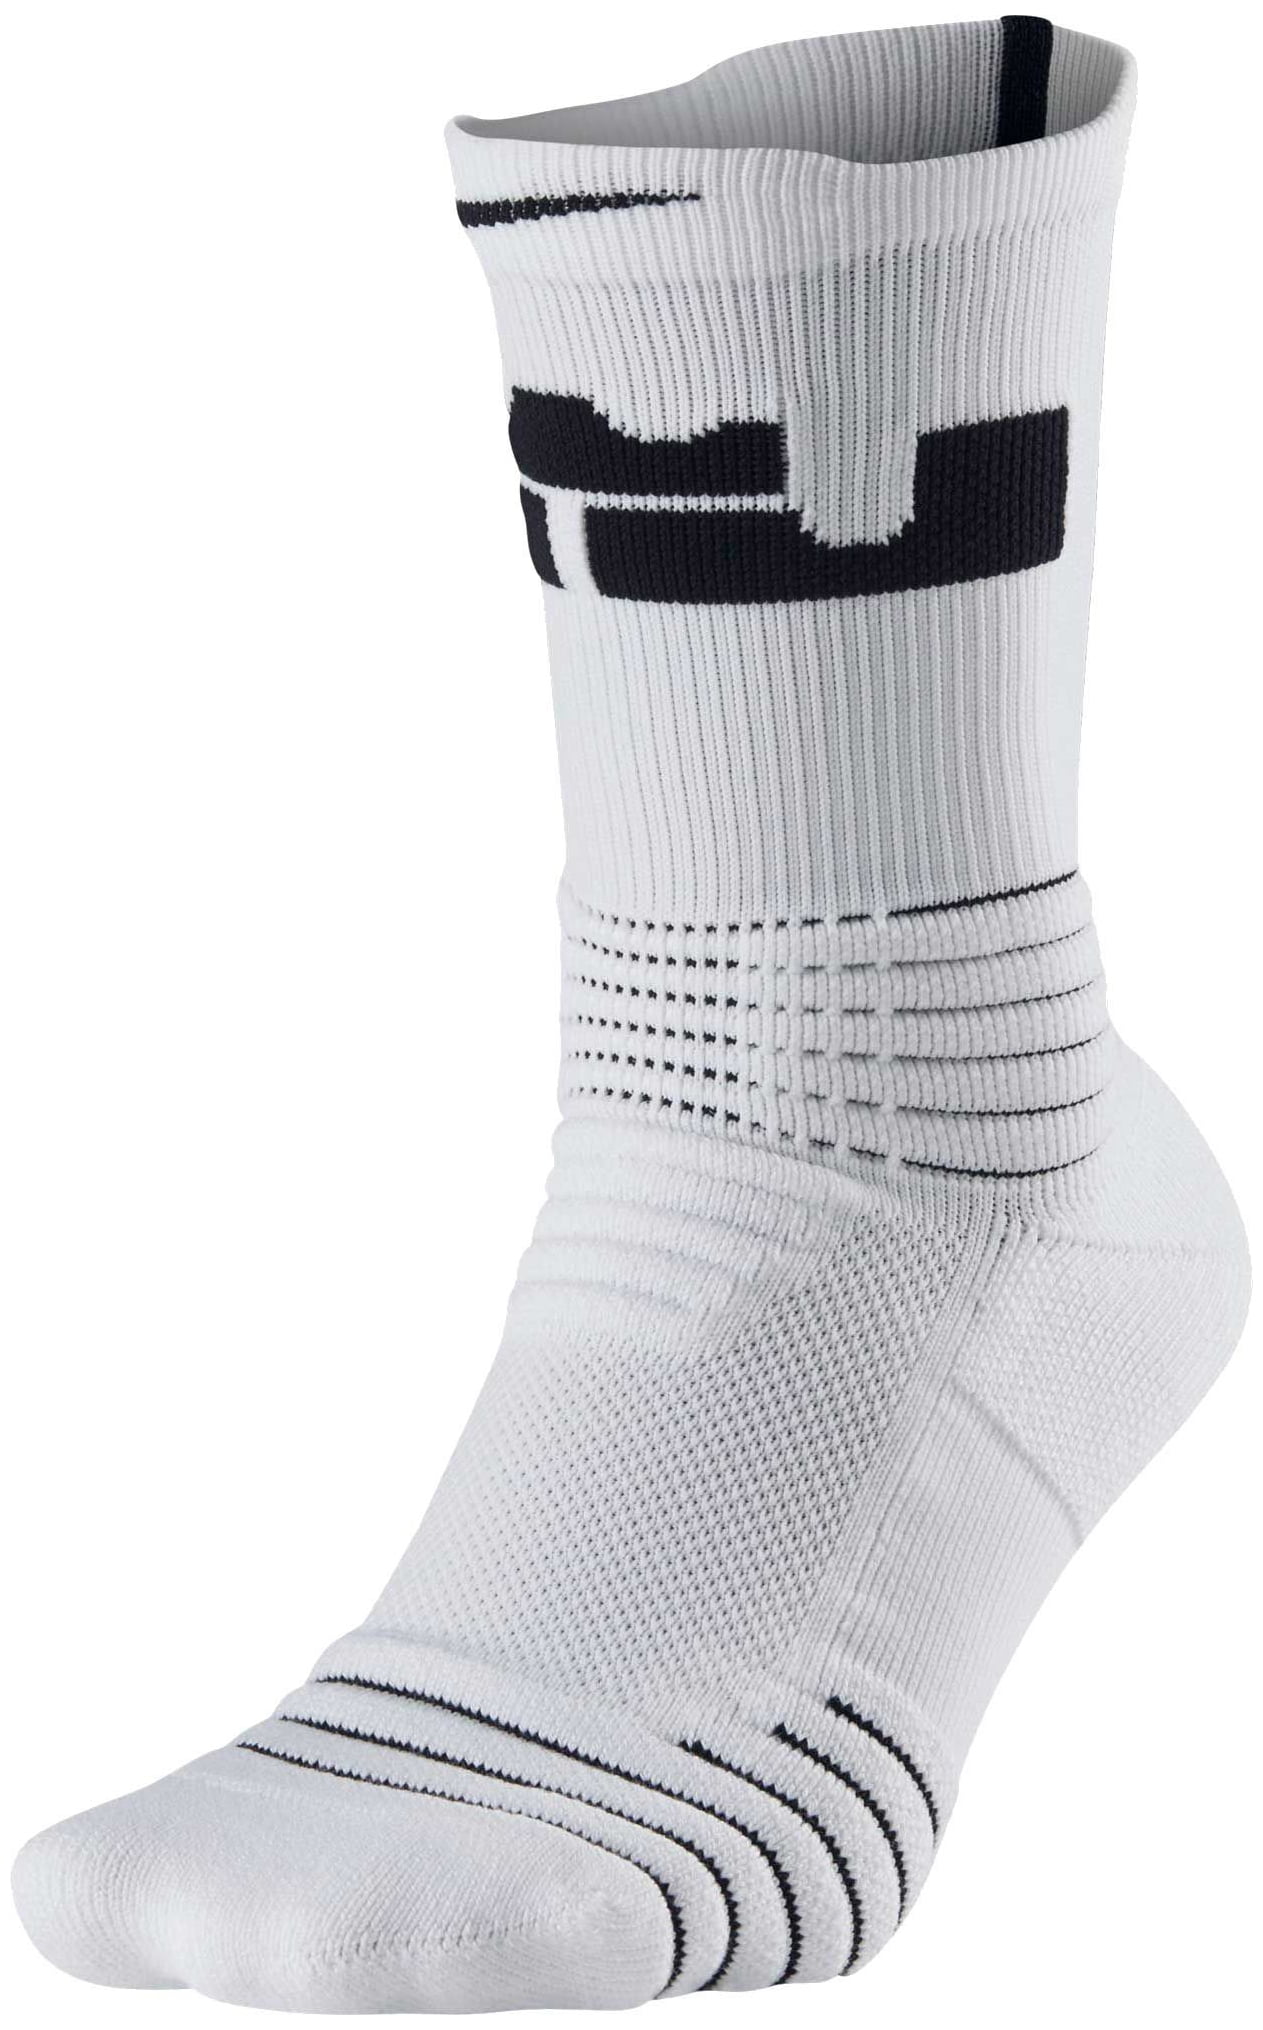 Nike Elite Socks - White/Black - XL Walmart.com